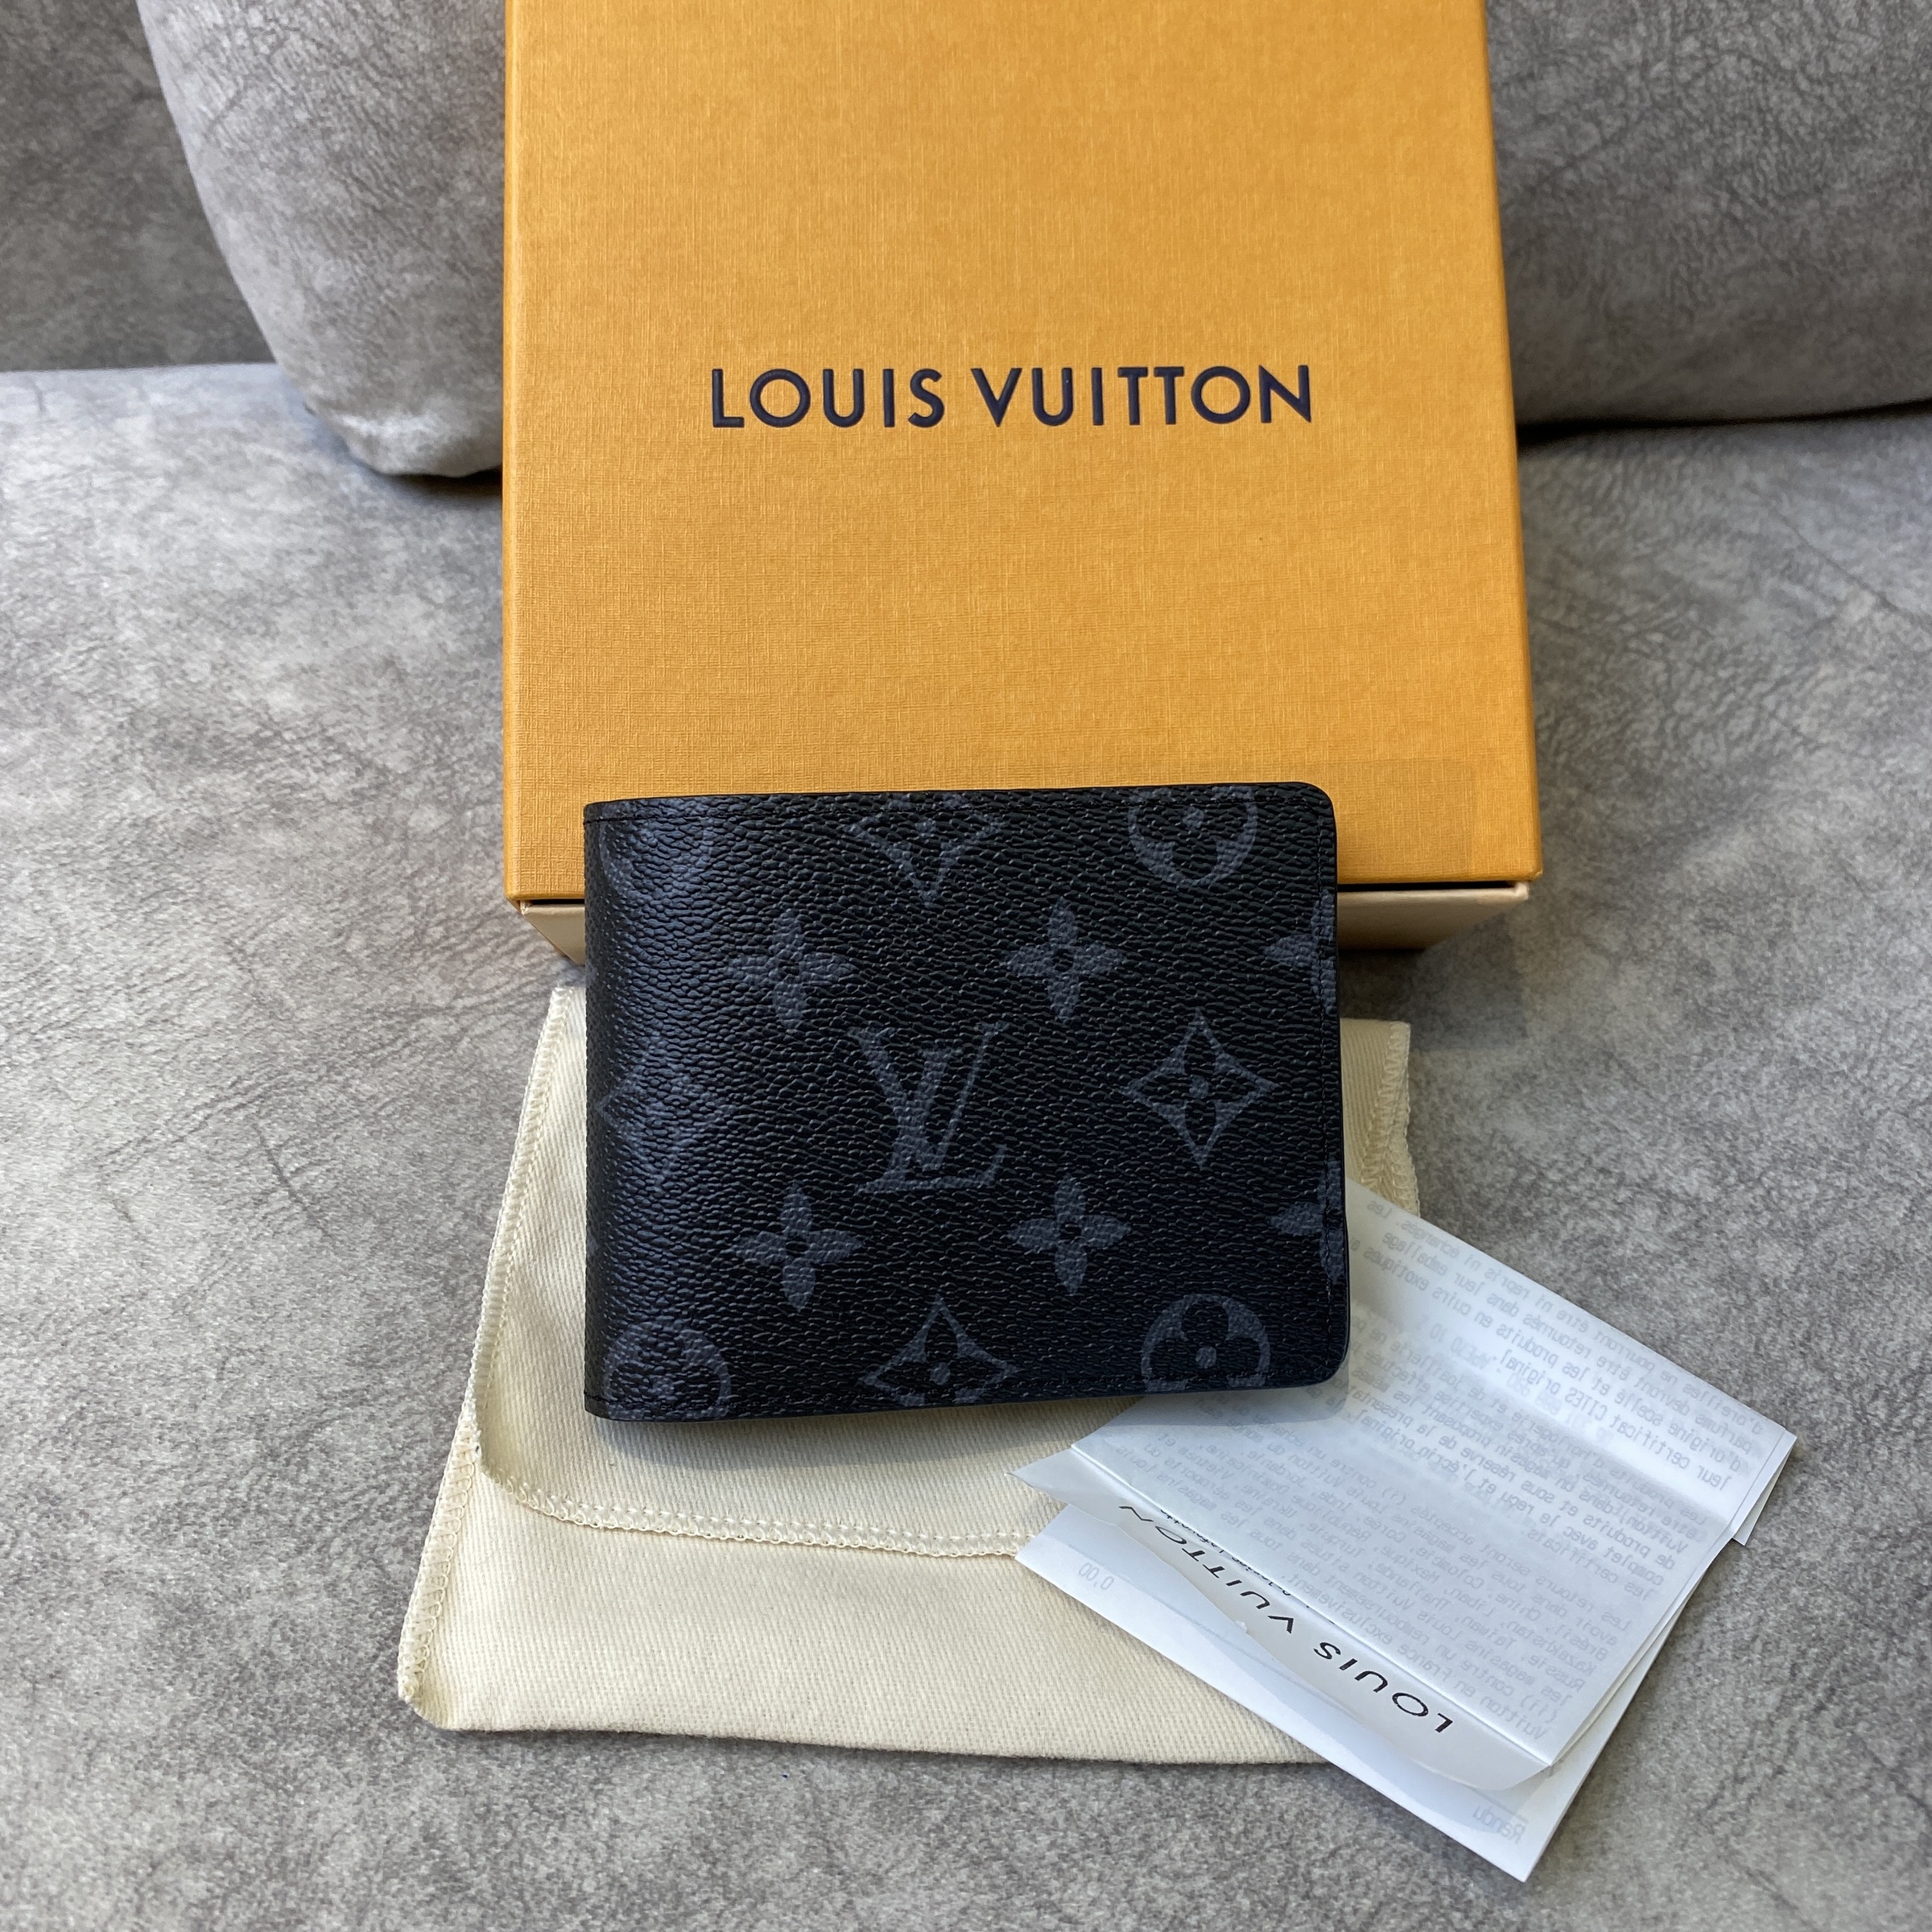 NTWRK - Preowned Louis Vuitton Monogram Deauville Sku# 63964